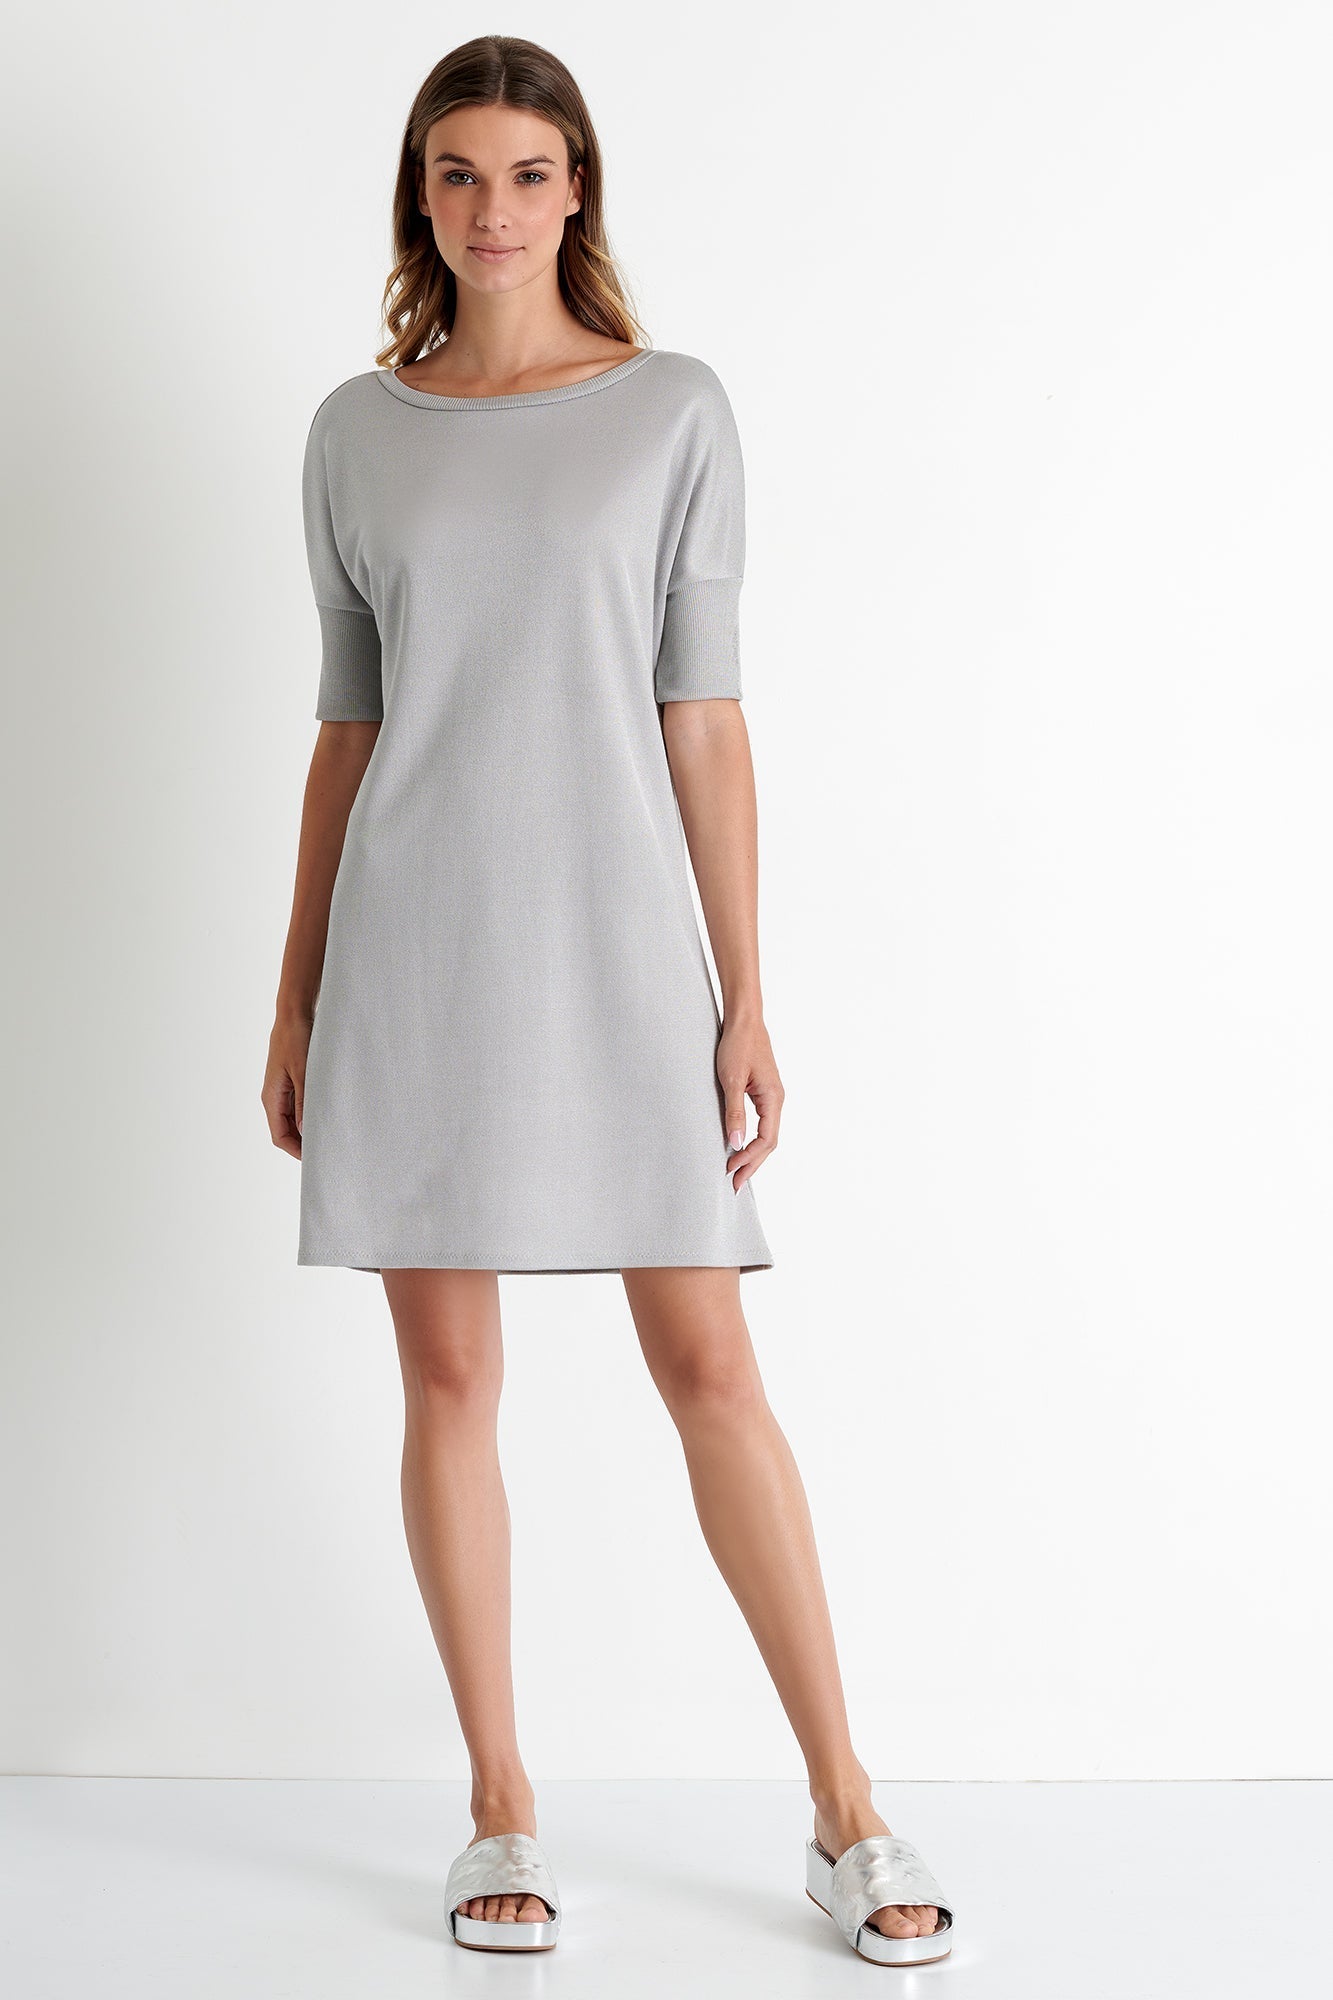 Short Sleeve Dress 2 / 160 Silver / 88% VISCOSE 12% POLYAMIDE